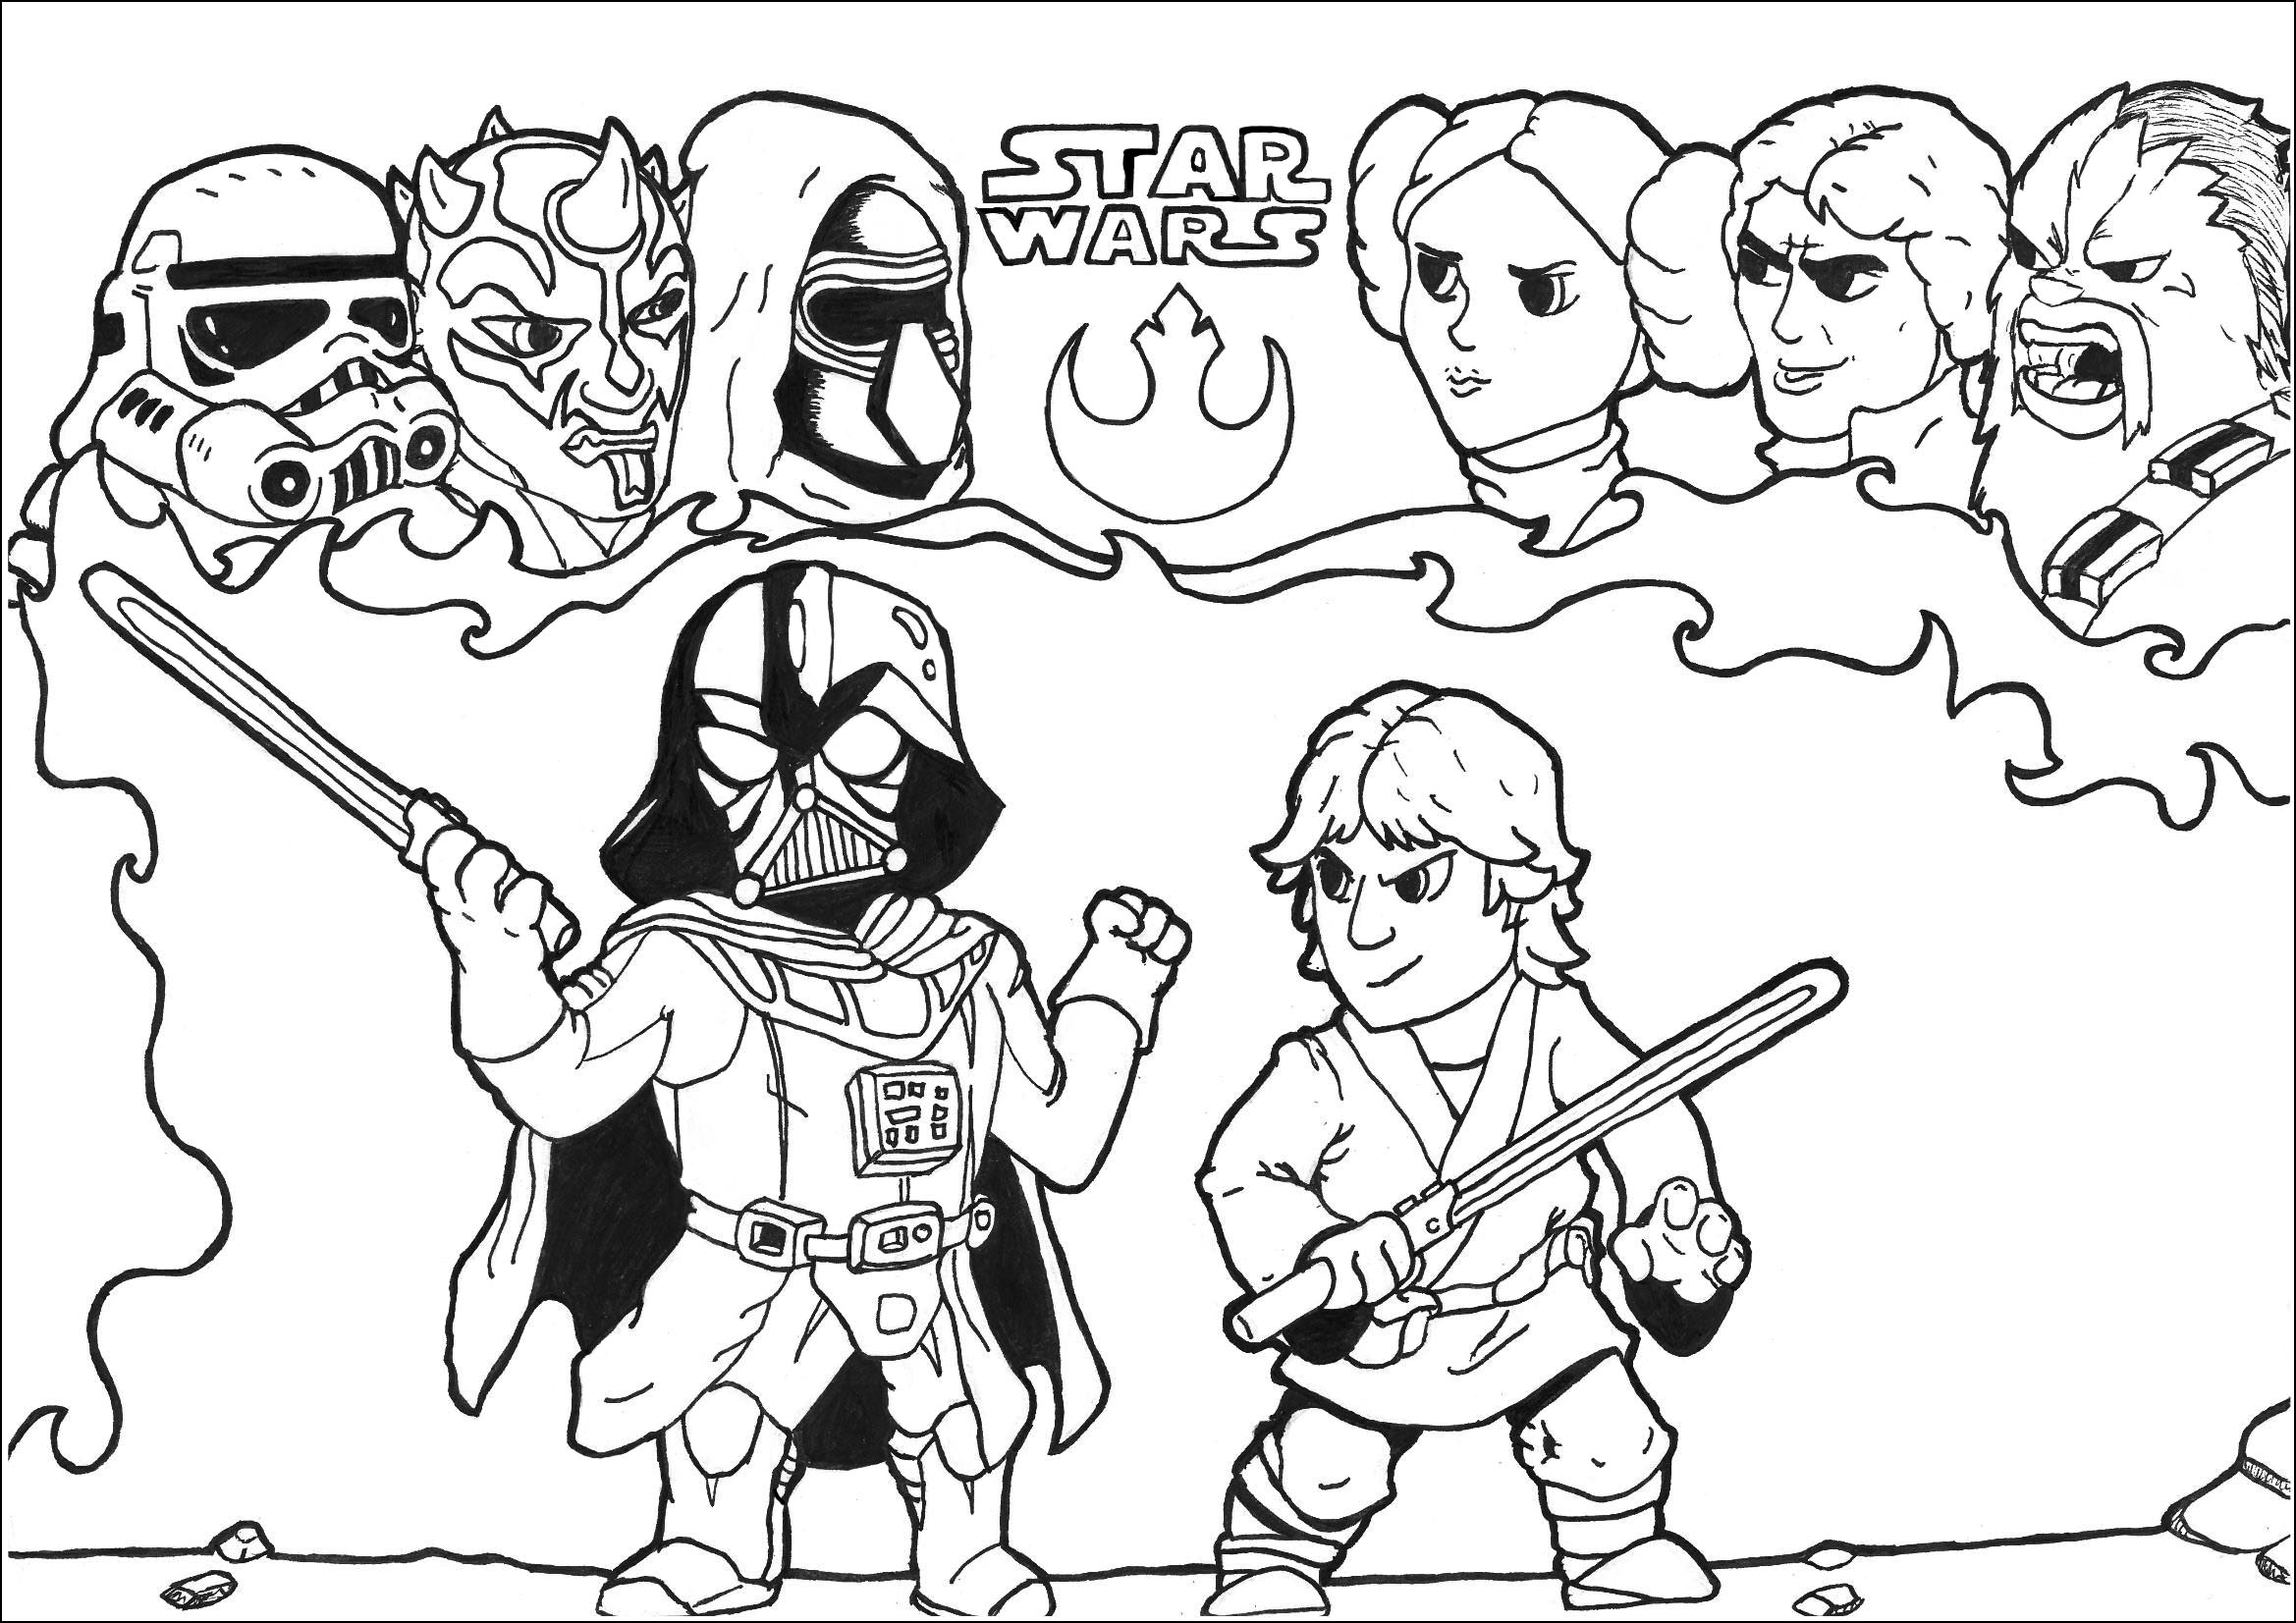 Luke vs Dark Vador et autres personnages de la Saga. Un dessin en mode Chibi